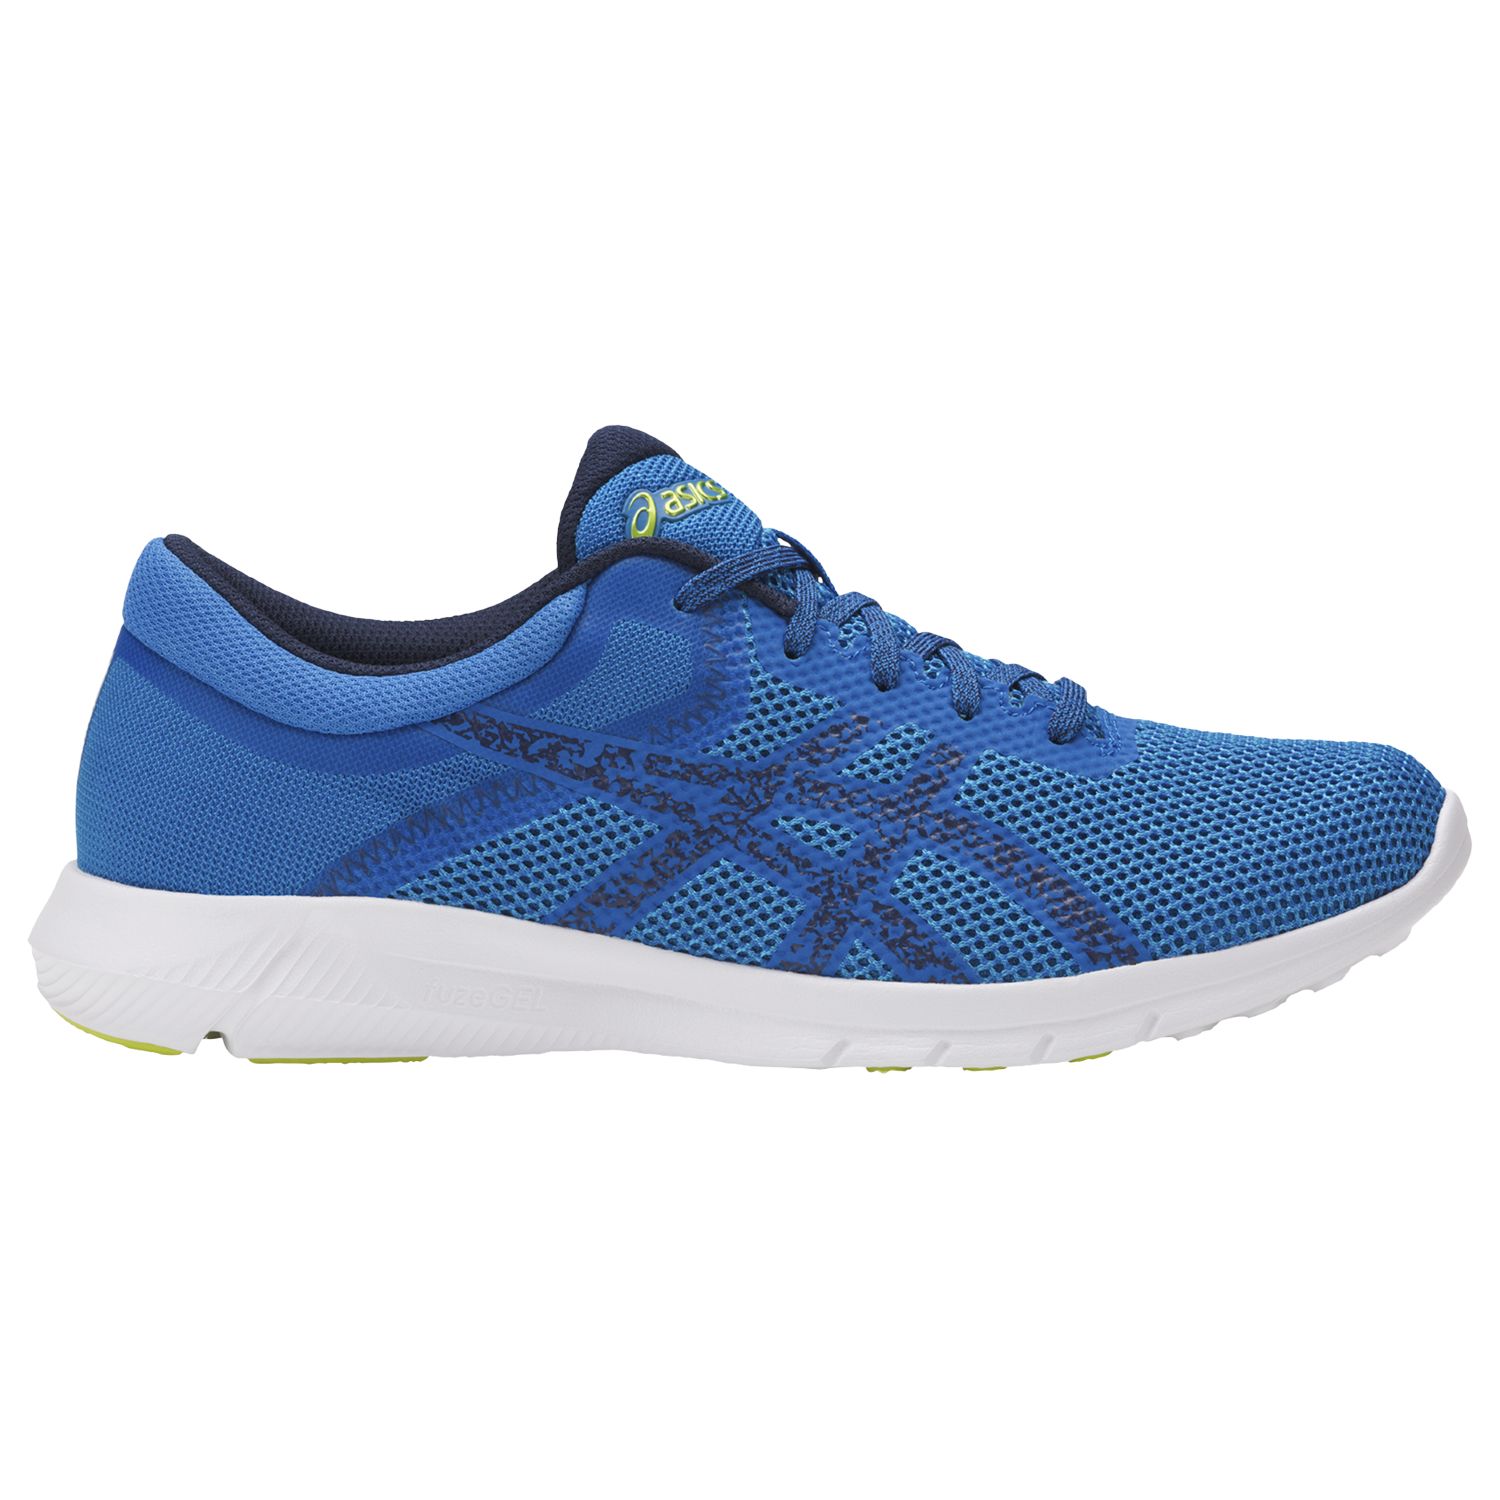 Asics NitroFuze 2 Men's Running Shoes, Blue, 9